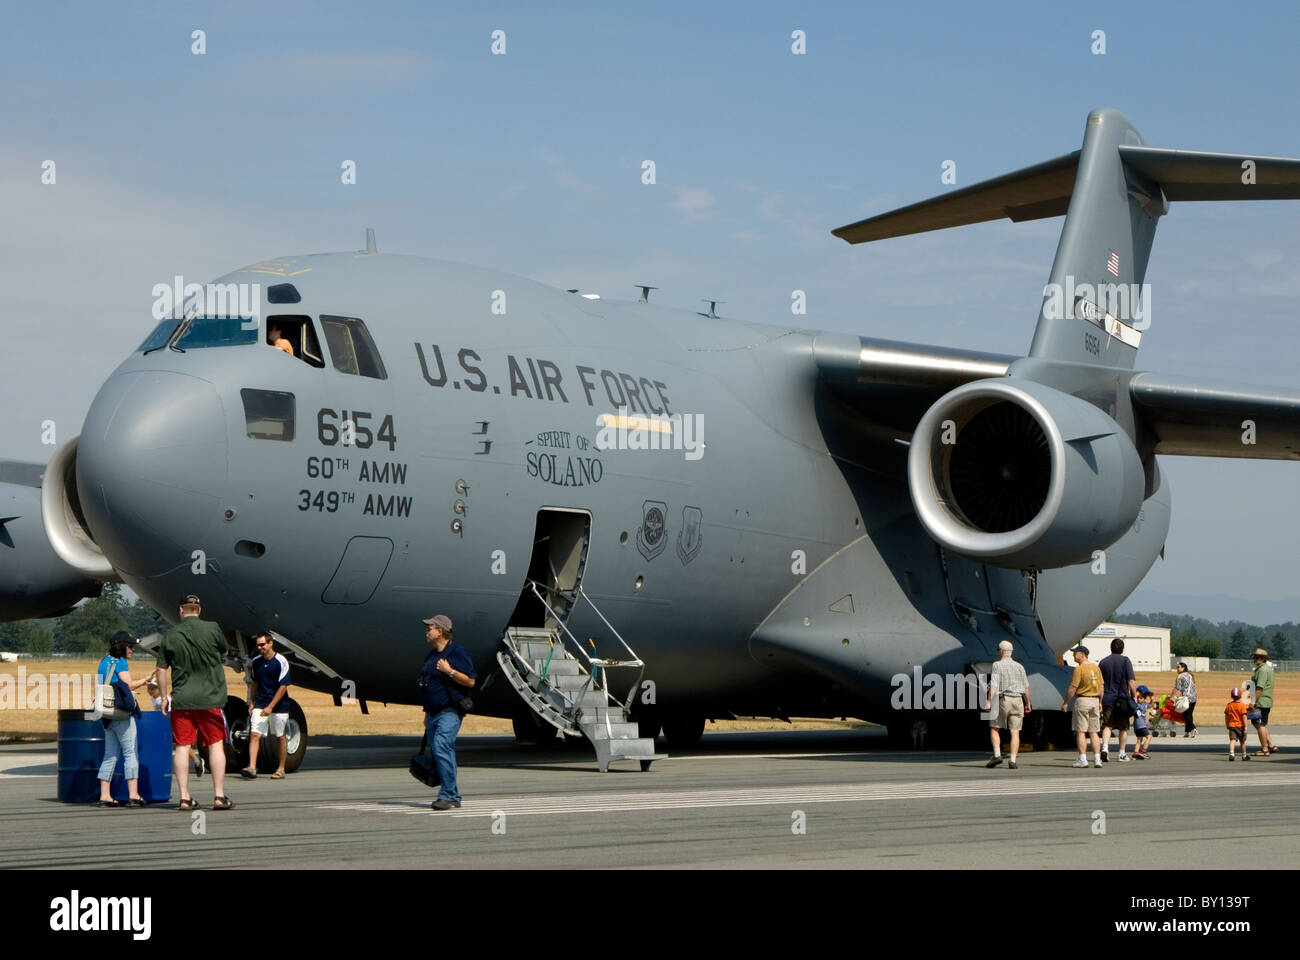 American U.S. Air Force aereo a terra in corrispondenza di un air show Foto Stock